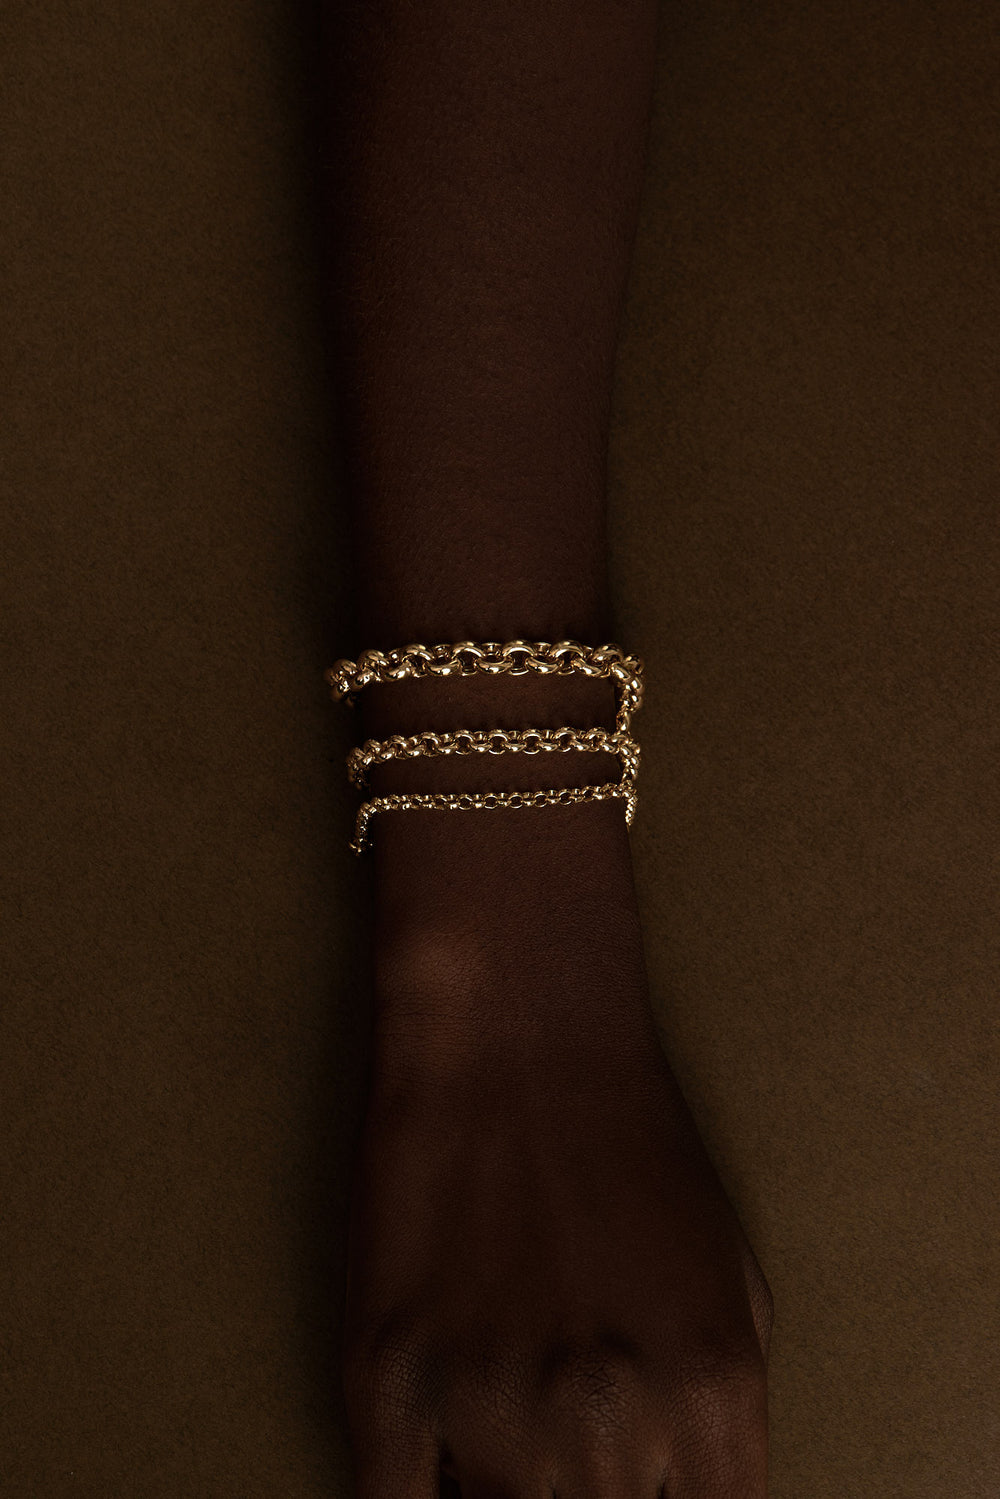 Medium Chateau Bracelet | Silver| Natasha Schweitzer